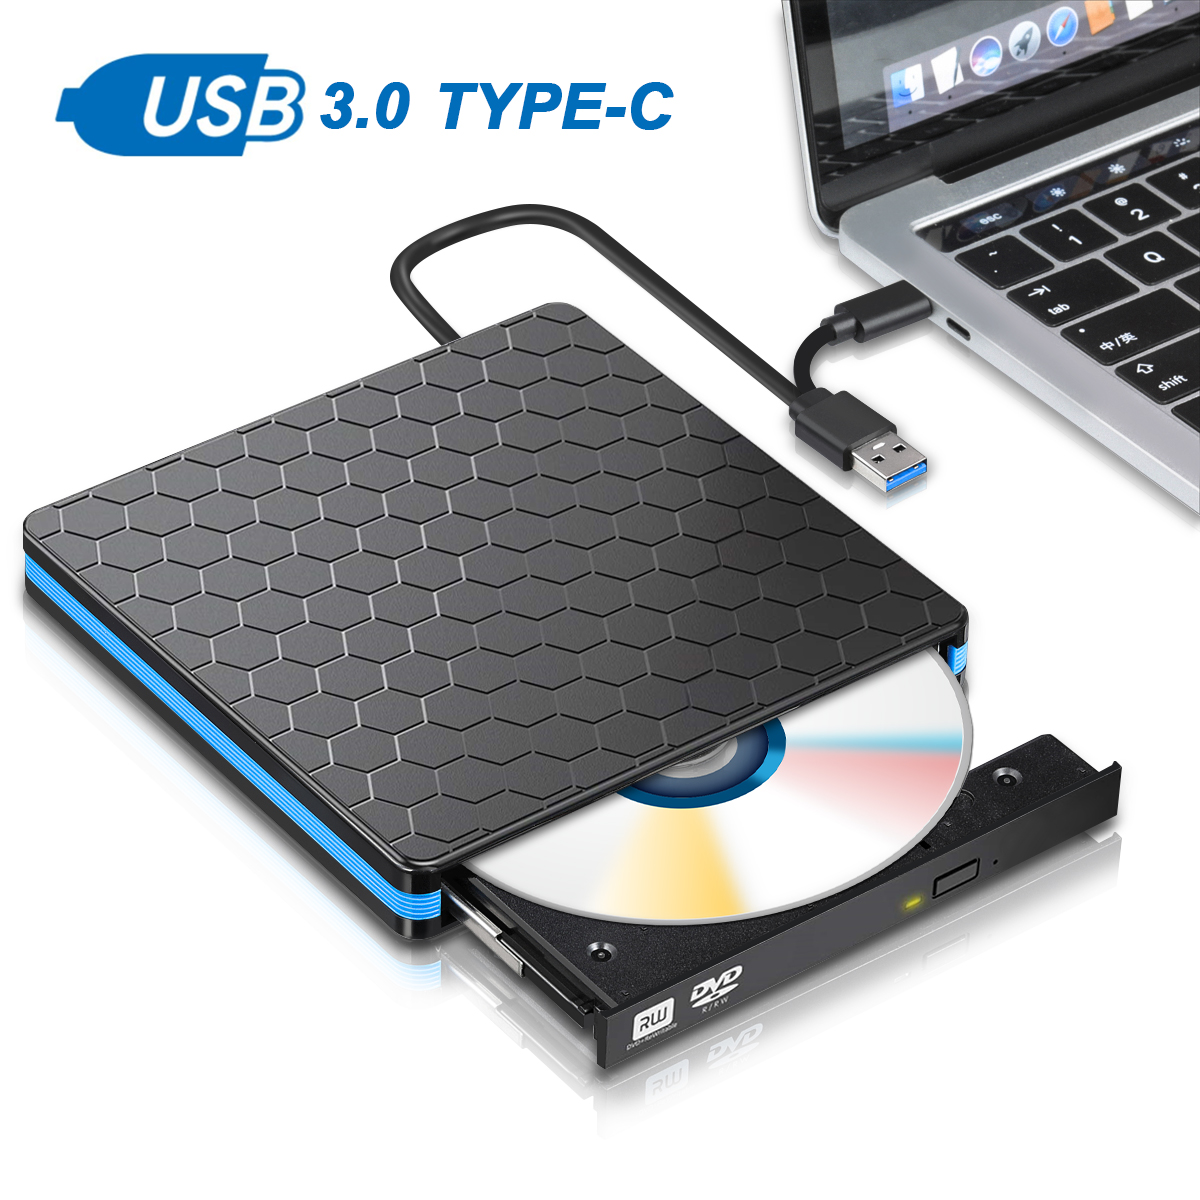 USB 2.0 External CD/DVD Drive for Compaq presario v3647tu 